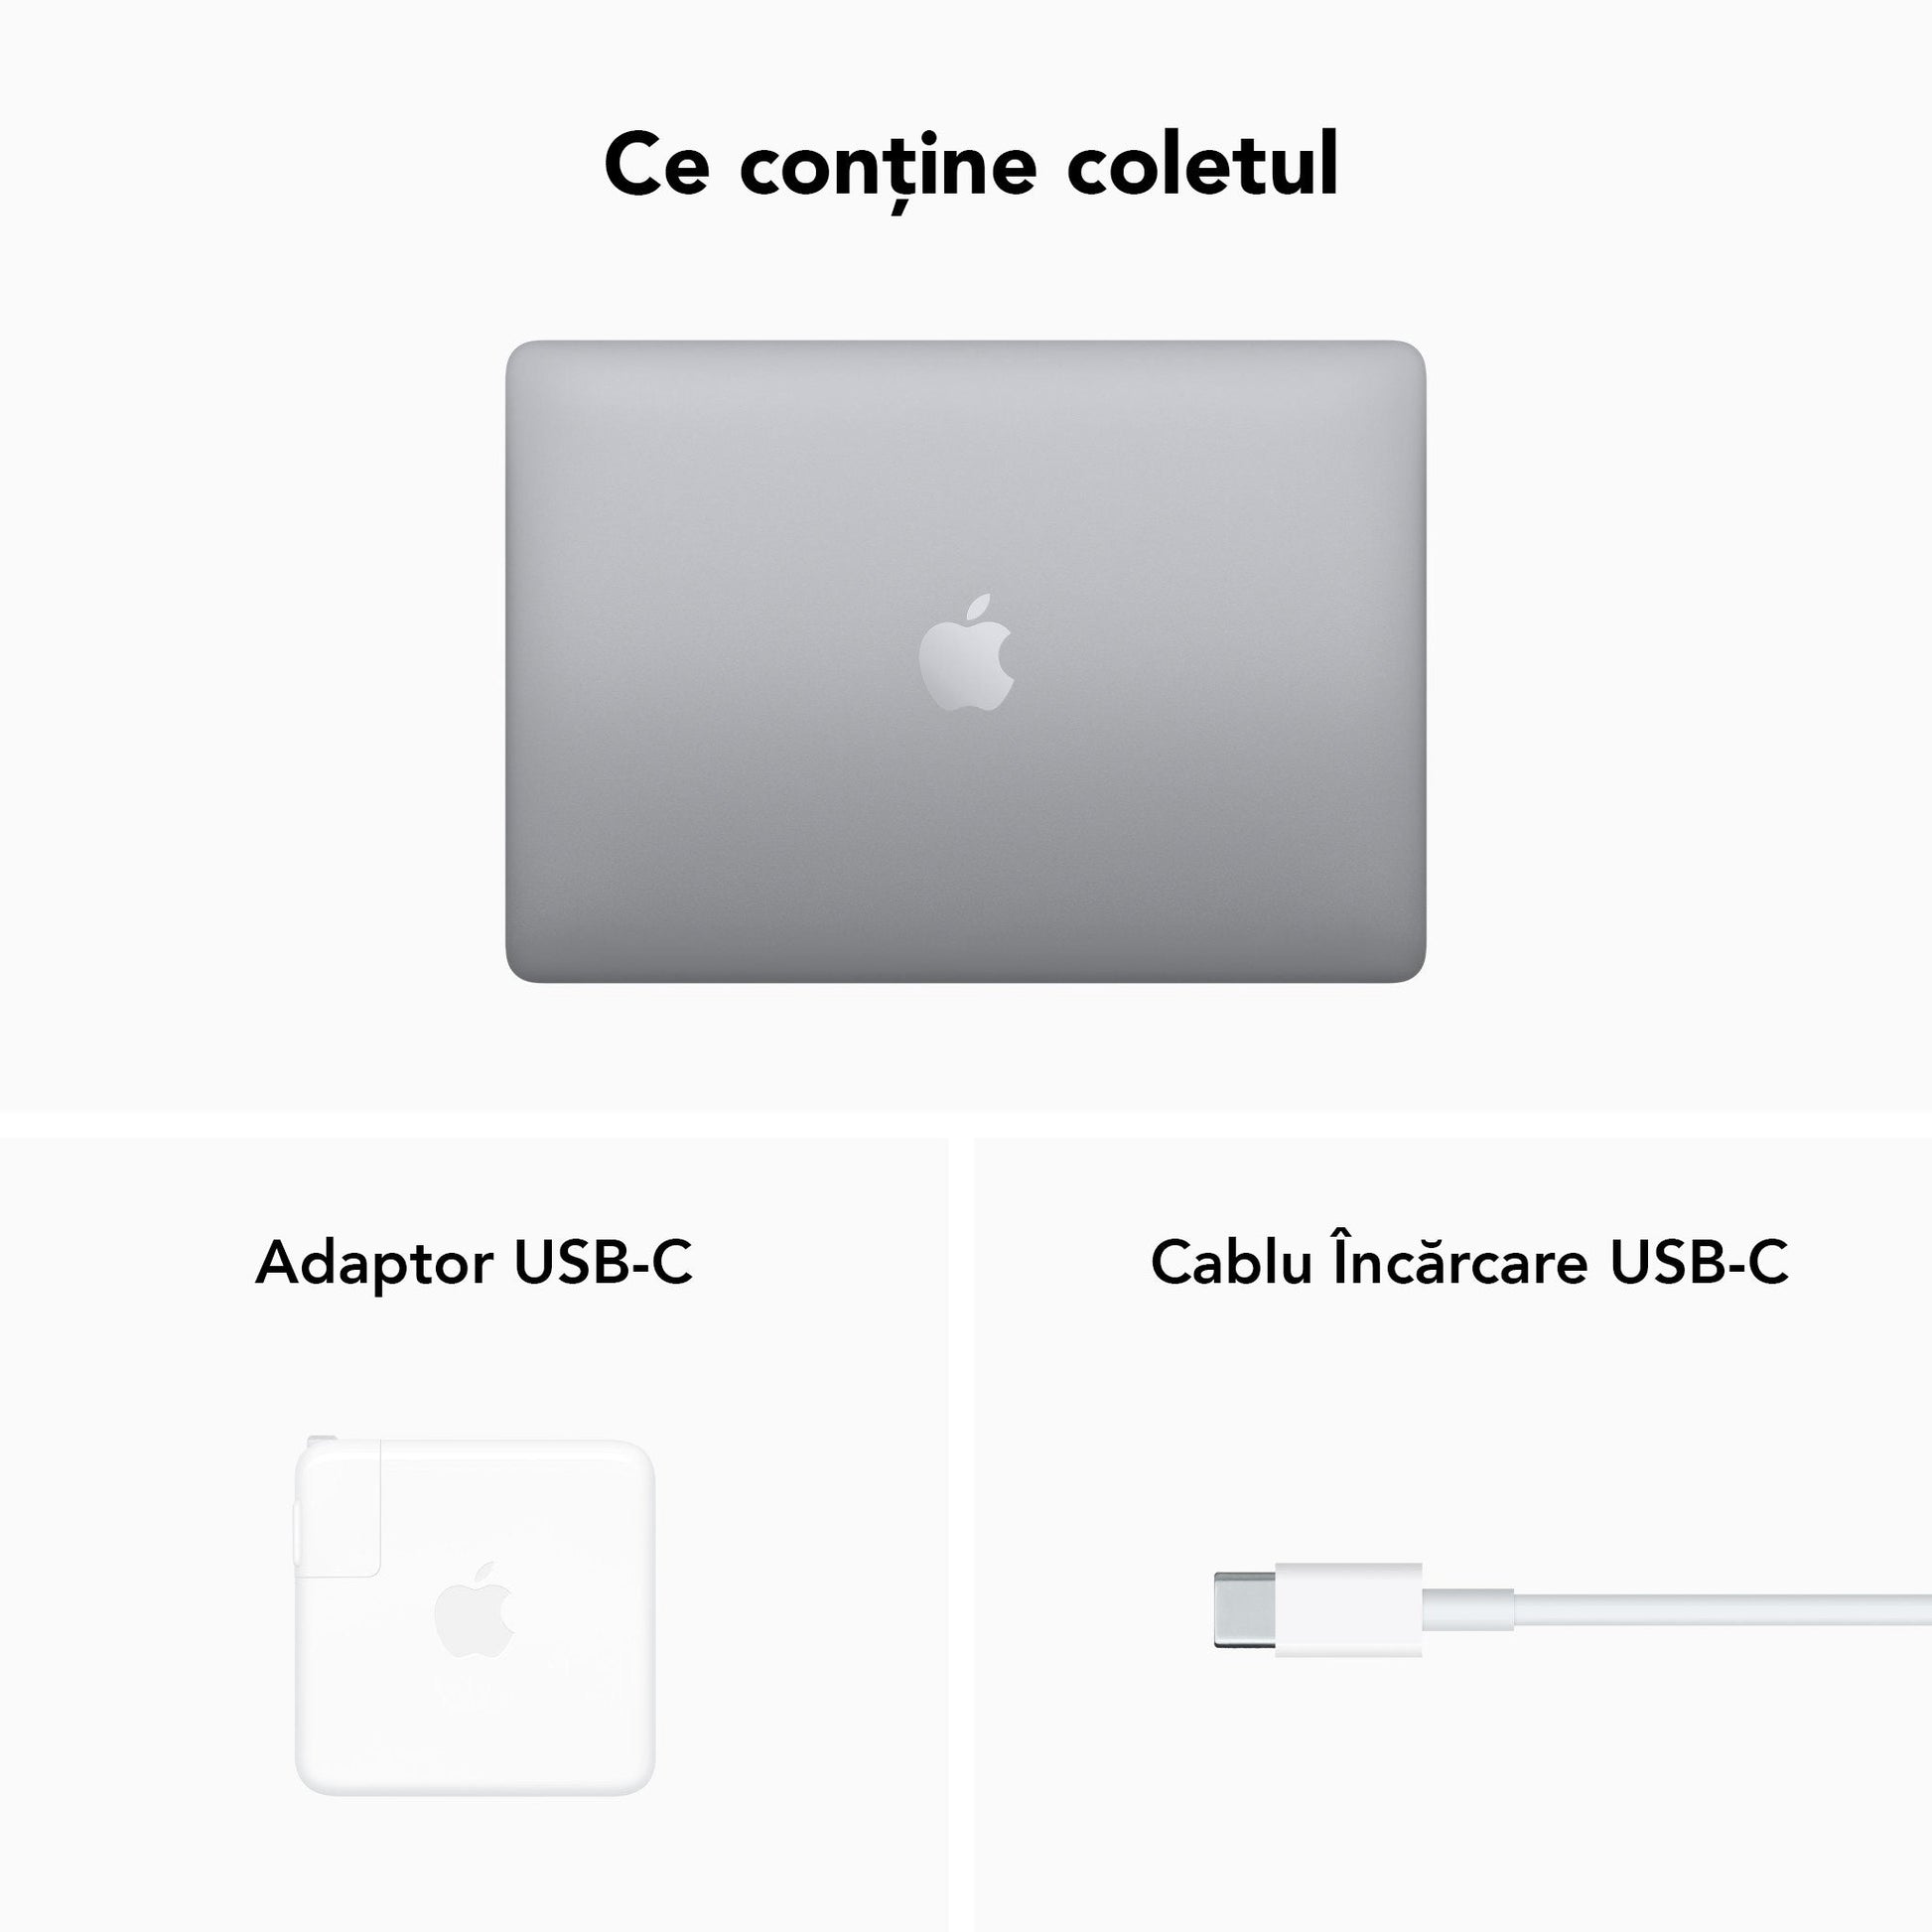 Apple Macbook Pro 13" 2020 Refurbished Core i7 2.3Ghz - refurbished